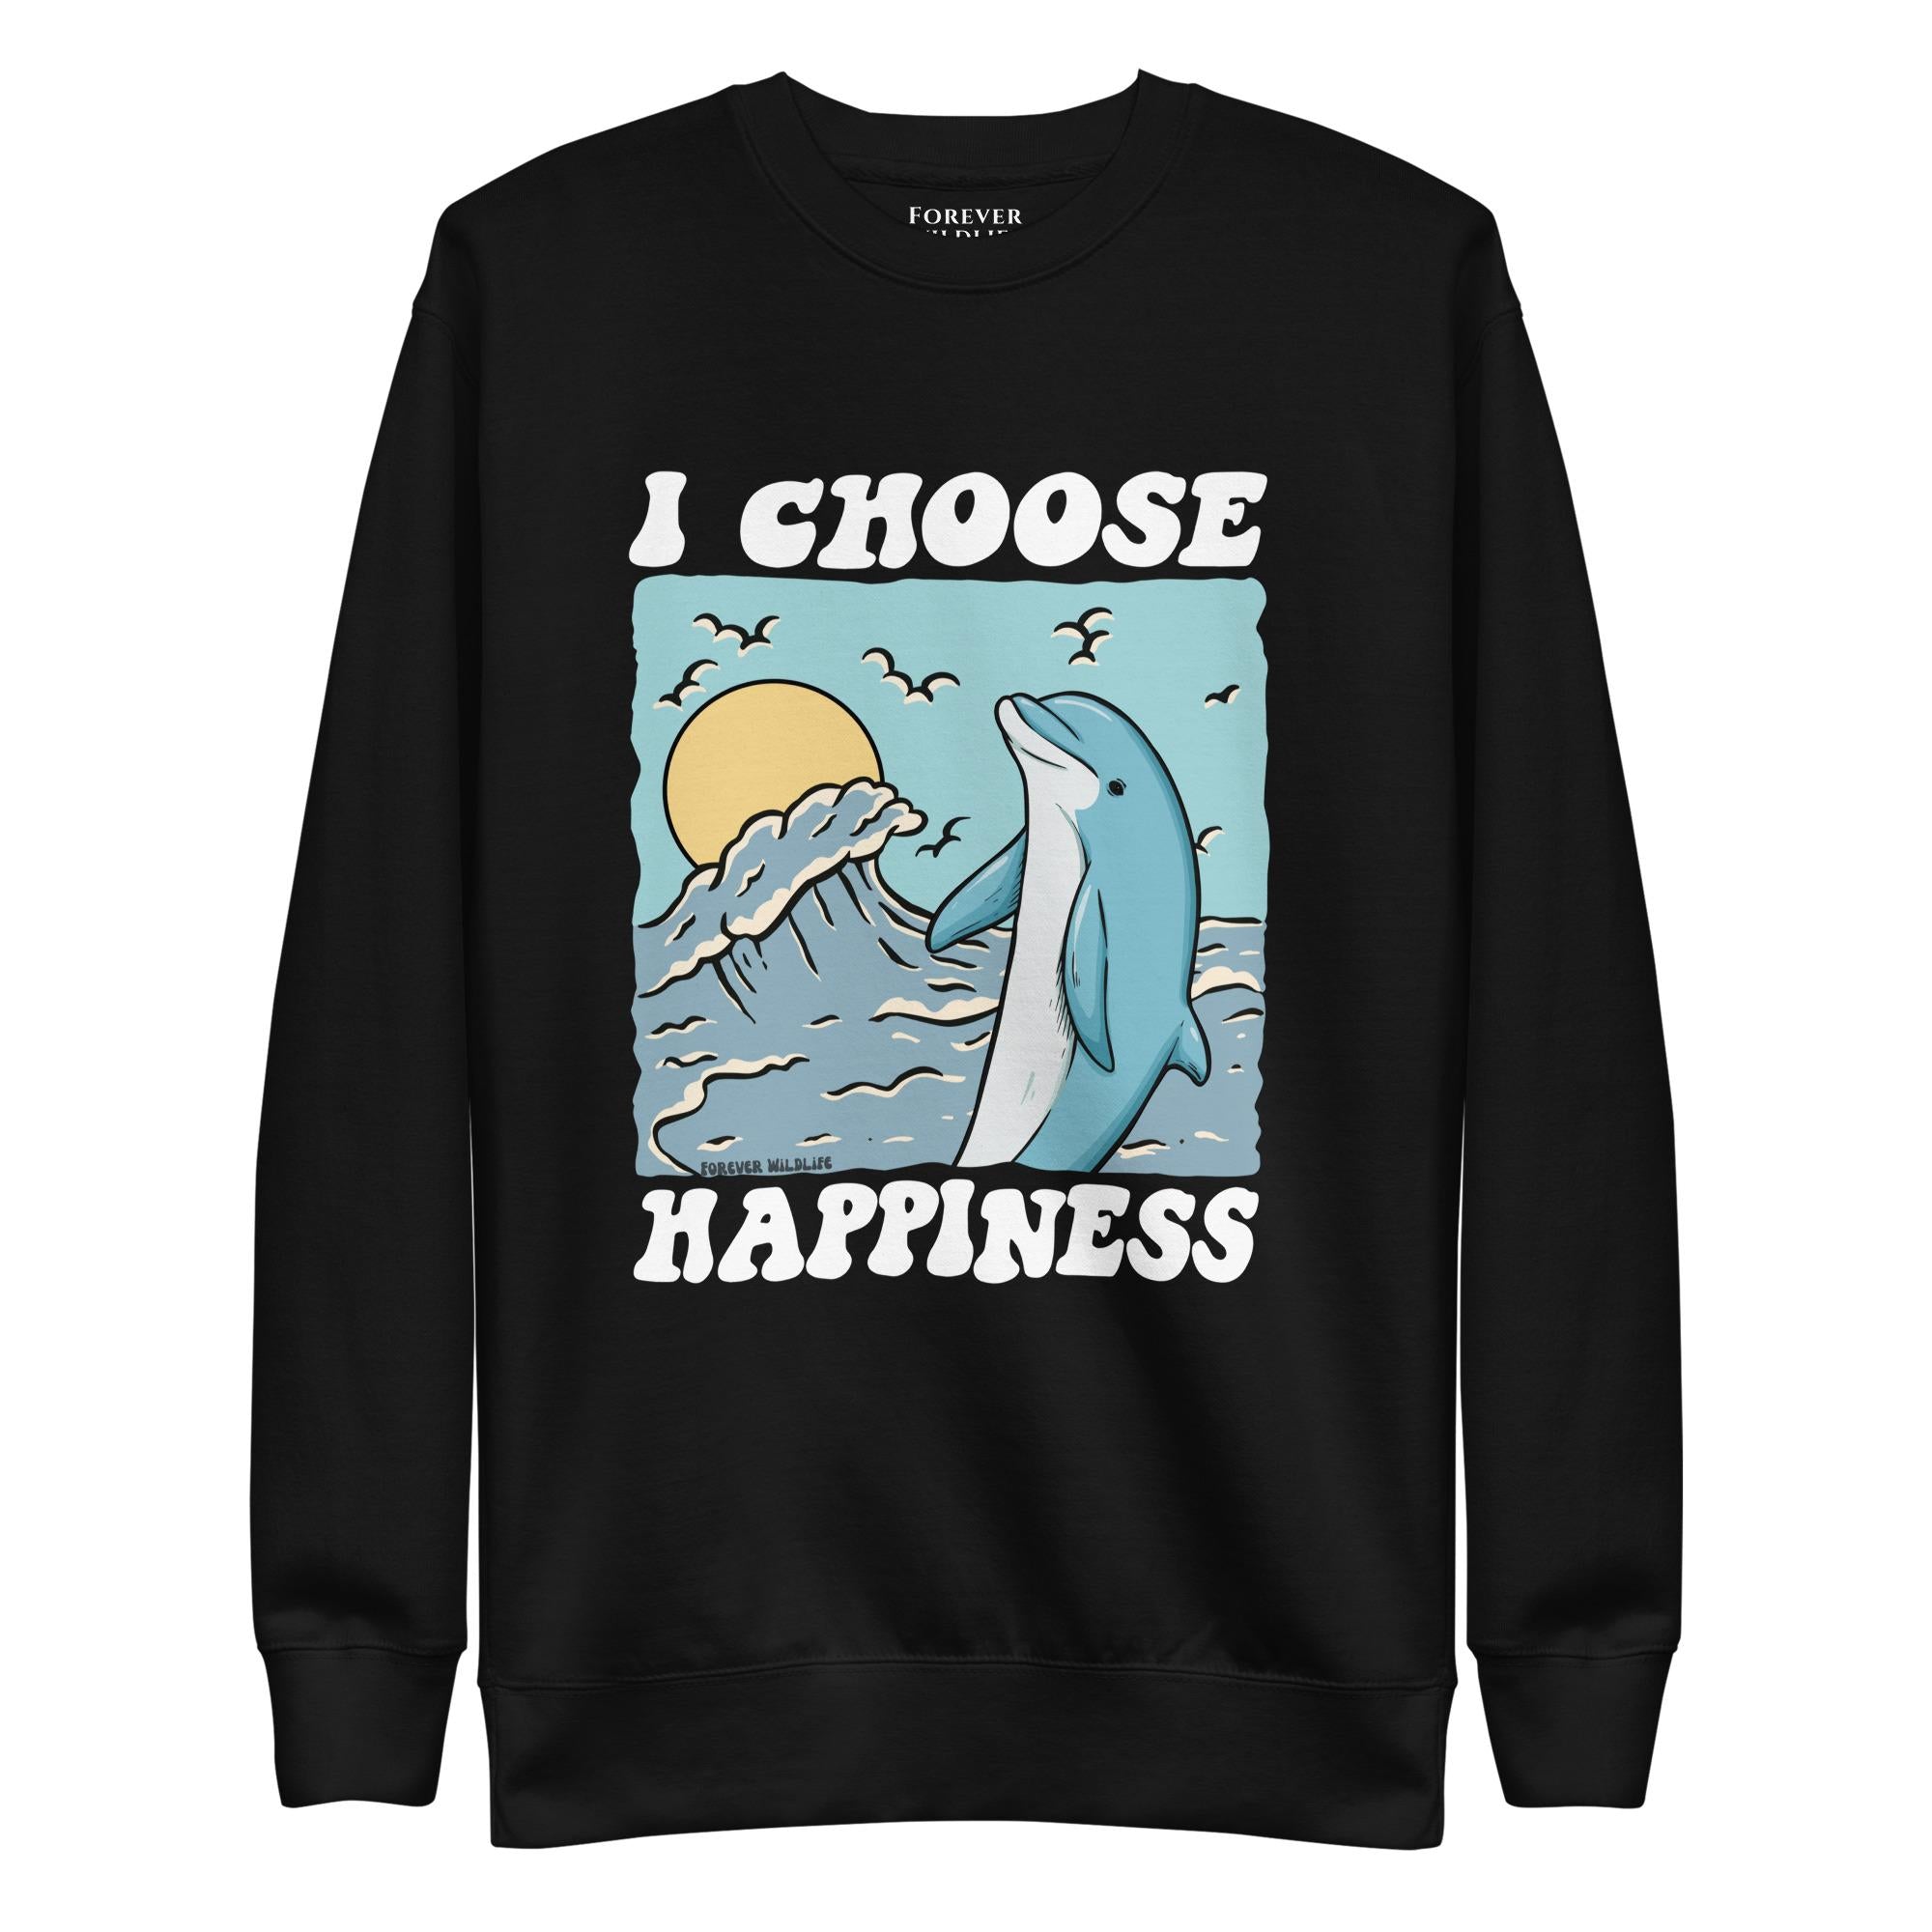 Dolphin Sweatshirt in Black-Premium Wildlife Animal Inspiration Sweatshirt Design with 'I Choose Happiness' text, part of Wildlife Sweatshirts & Clothing from Forever Wildlife.